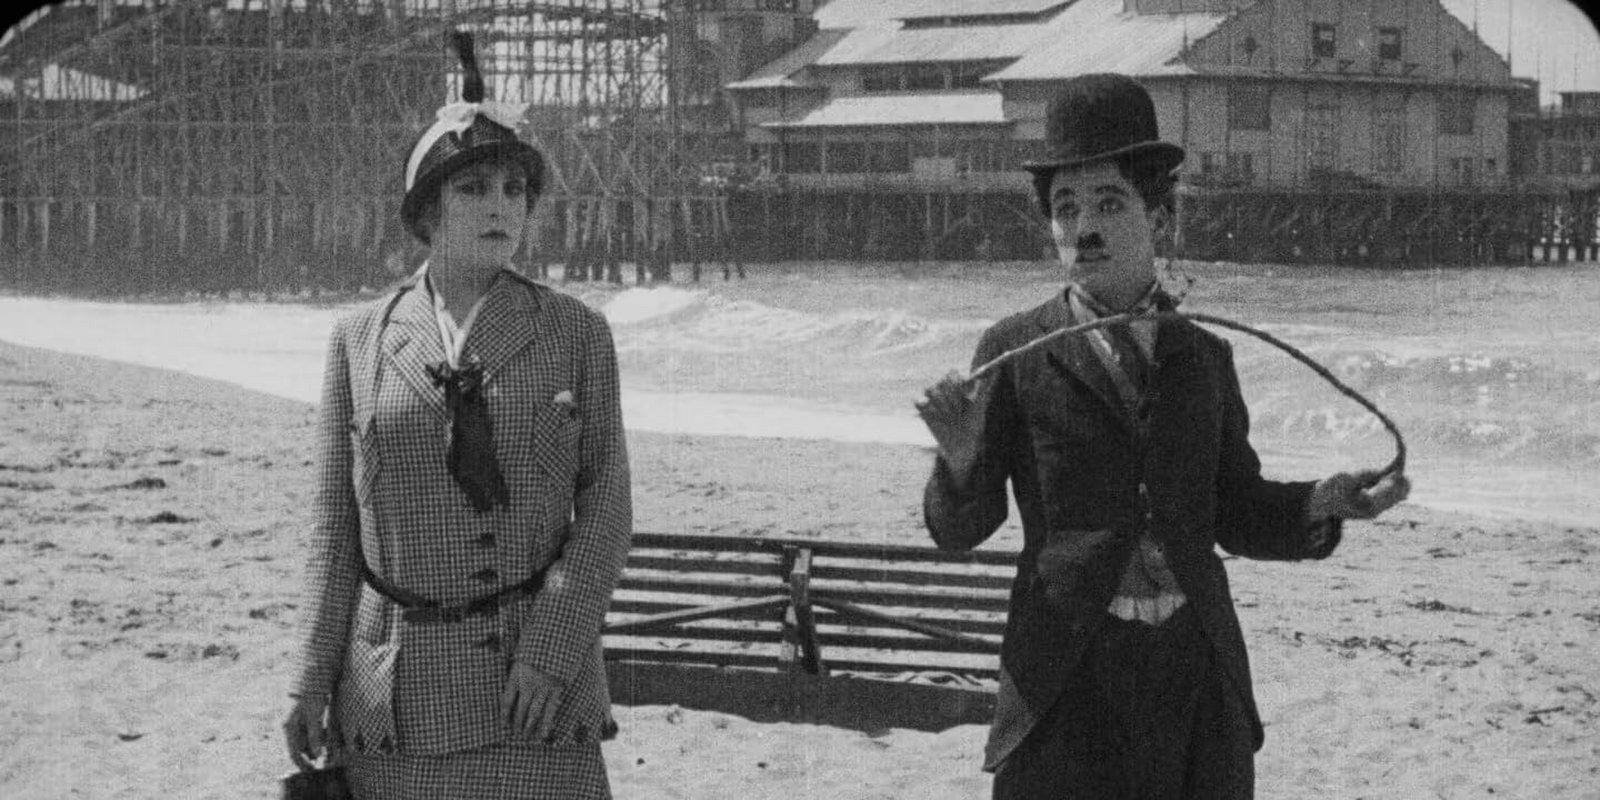 Charlie Chaplin - The Limelight Chaplin Films - Volume 5